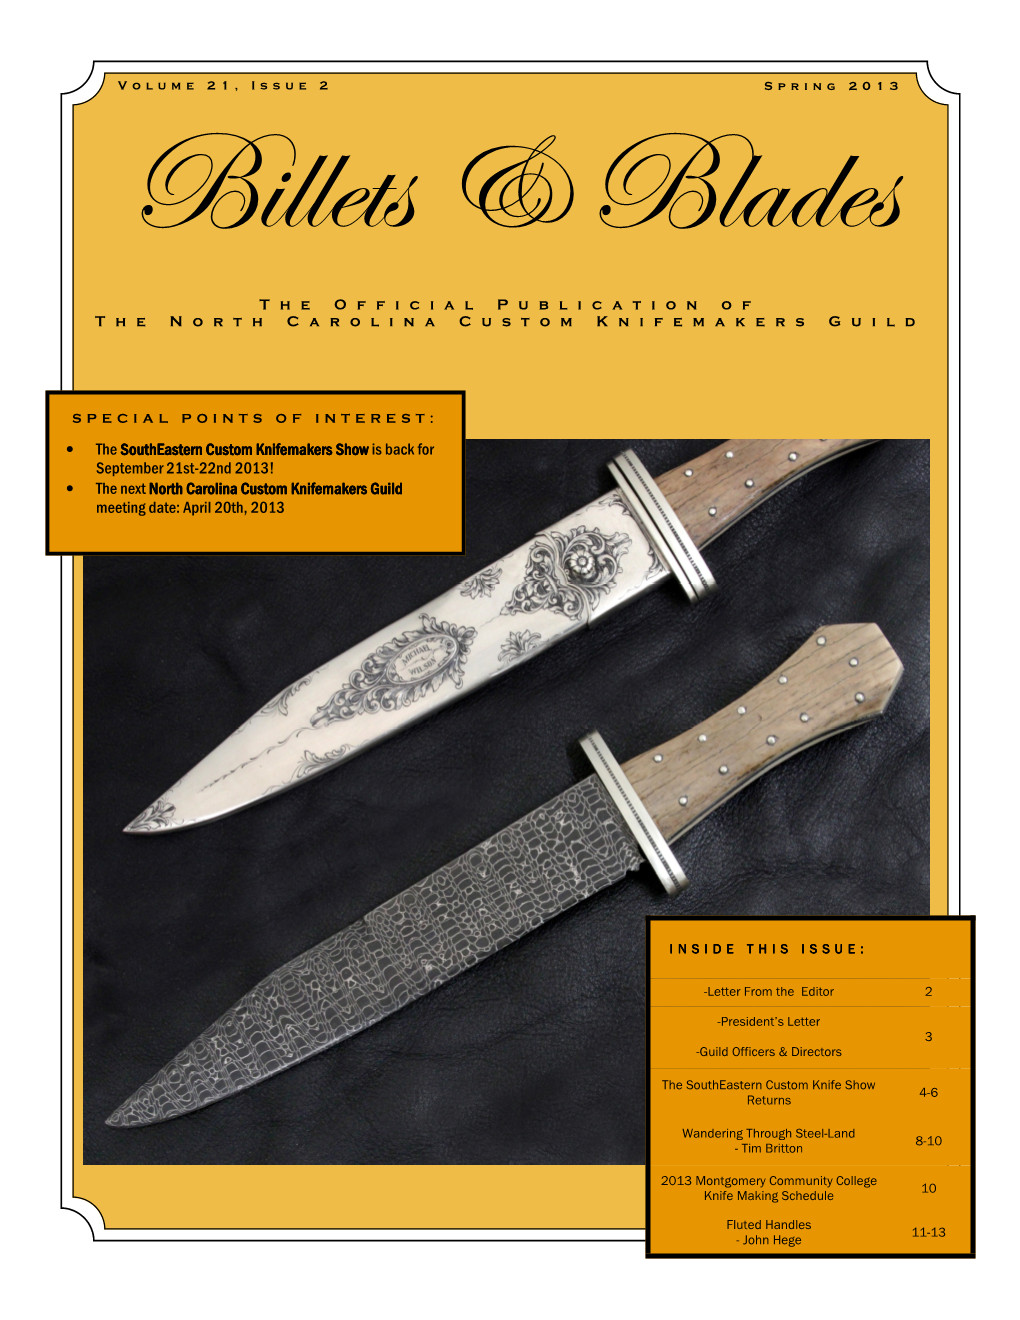 • the Southeastern Custom Knifemakers Show Southeastern